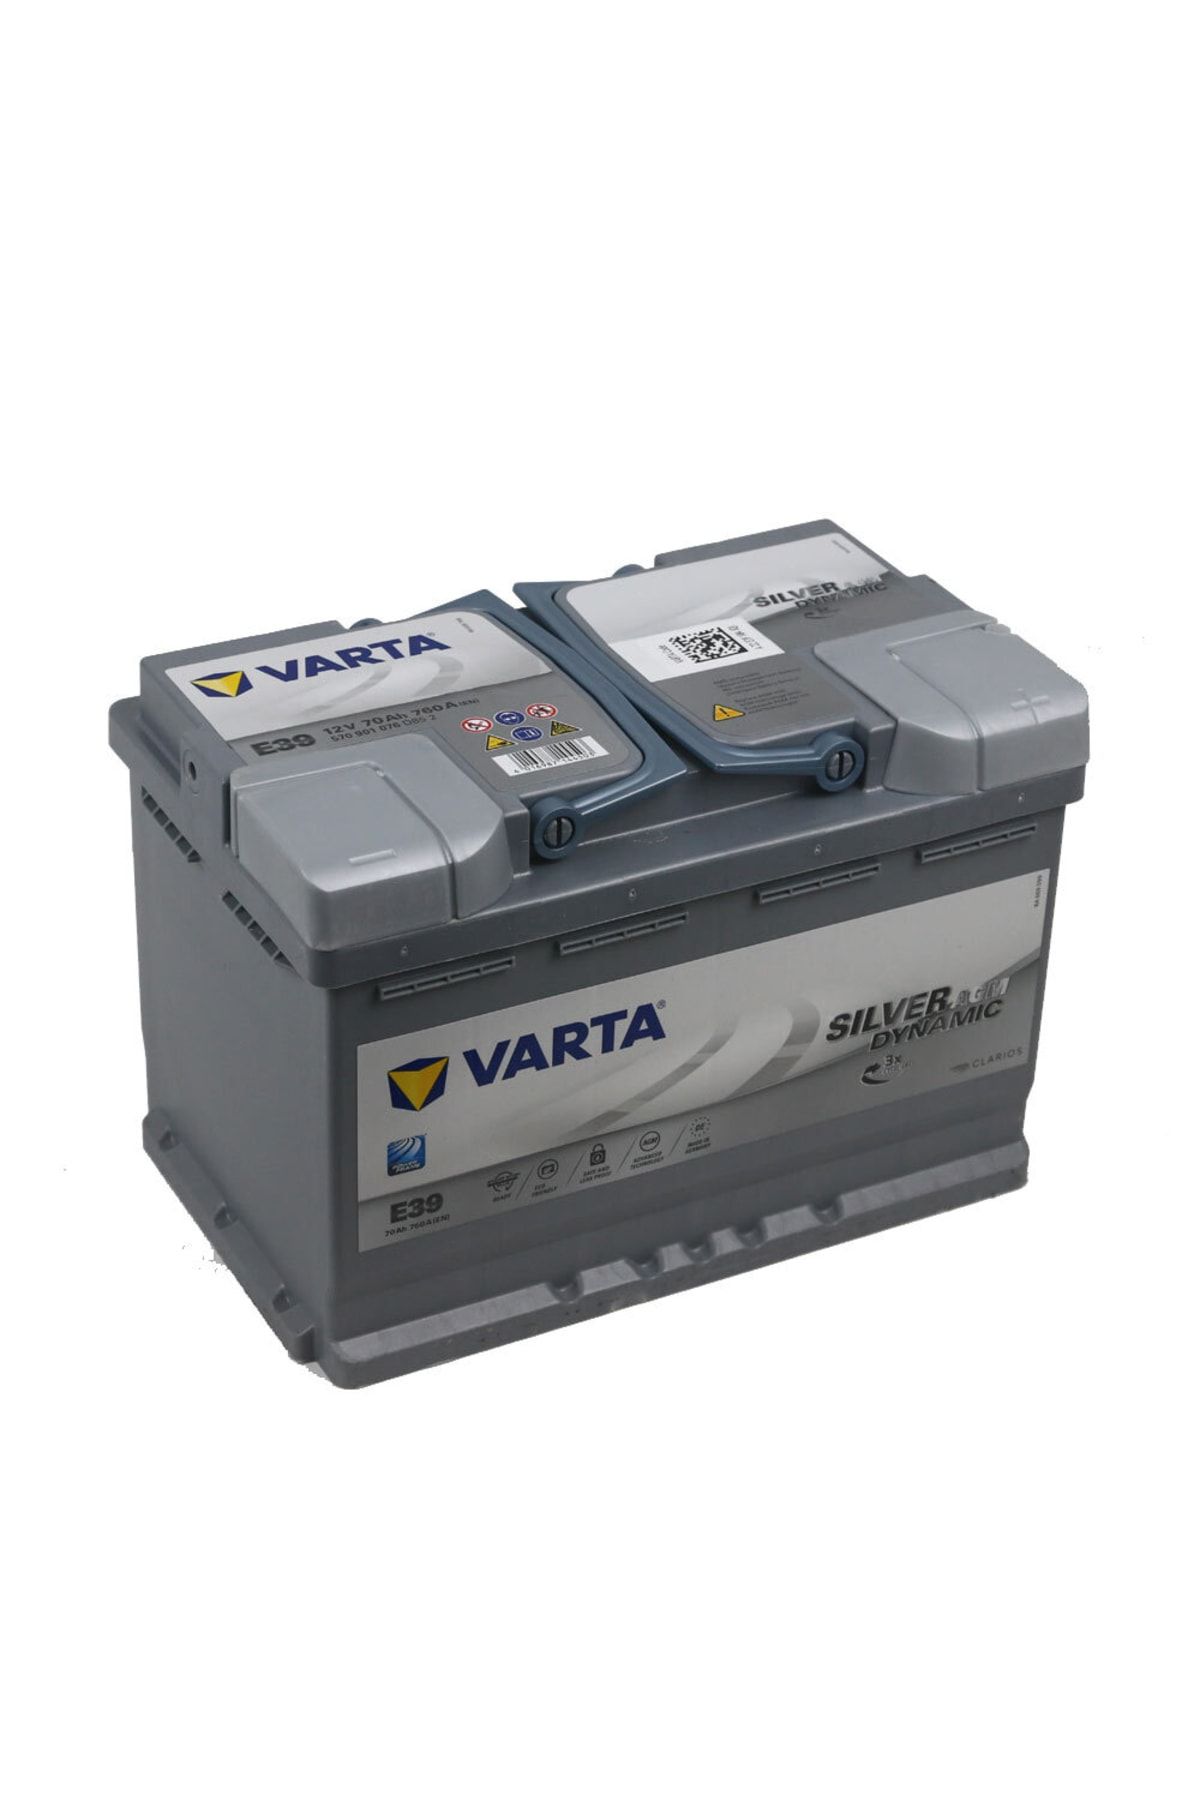 VARTA SILVER dynamic, E39 Batterie 570901076D852 12V, 760A, 70Ah